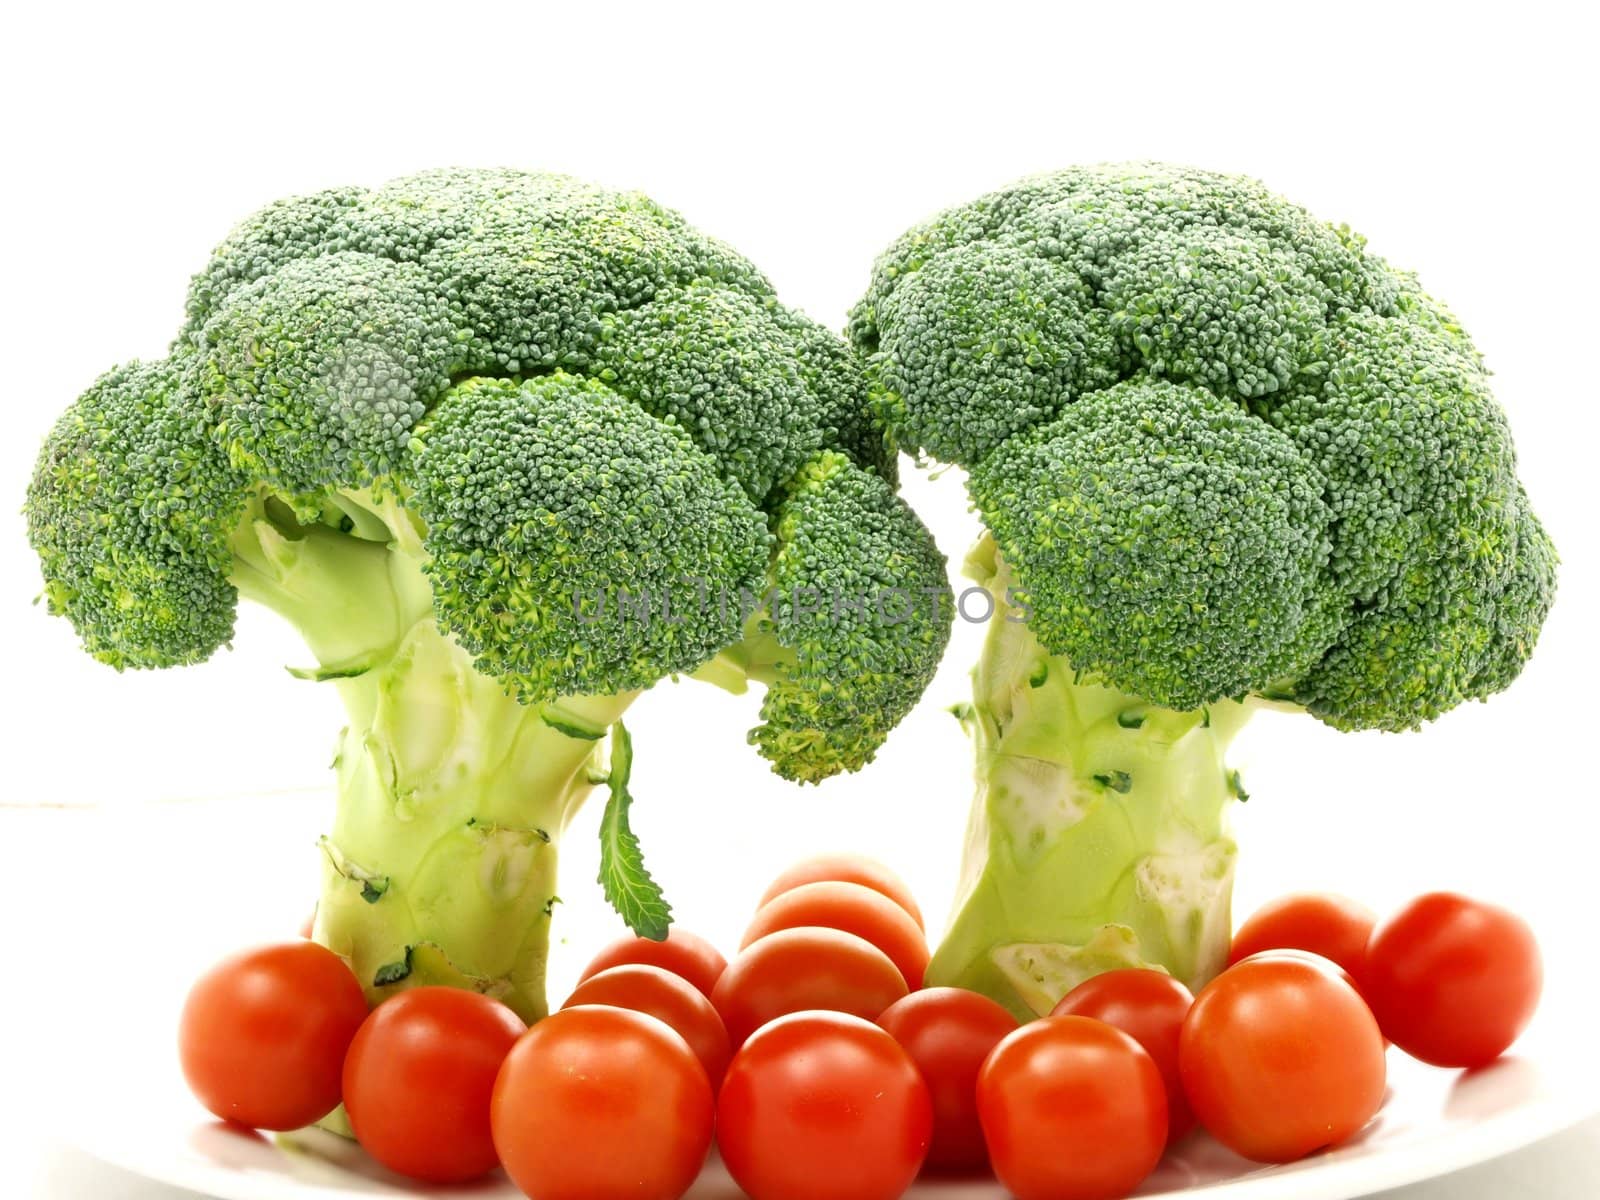 Broccoli and tomato by Arvebettum